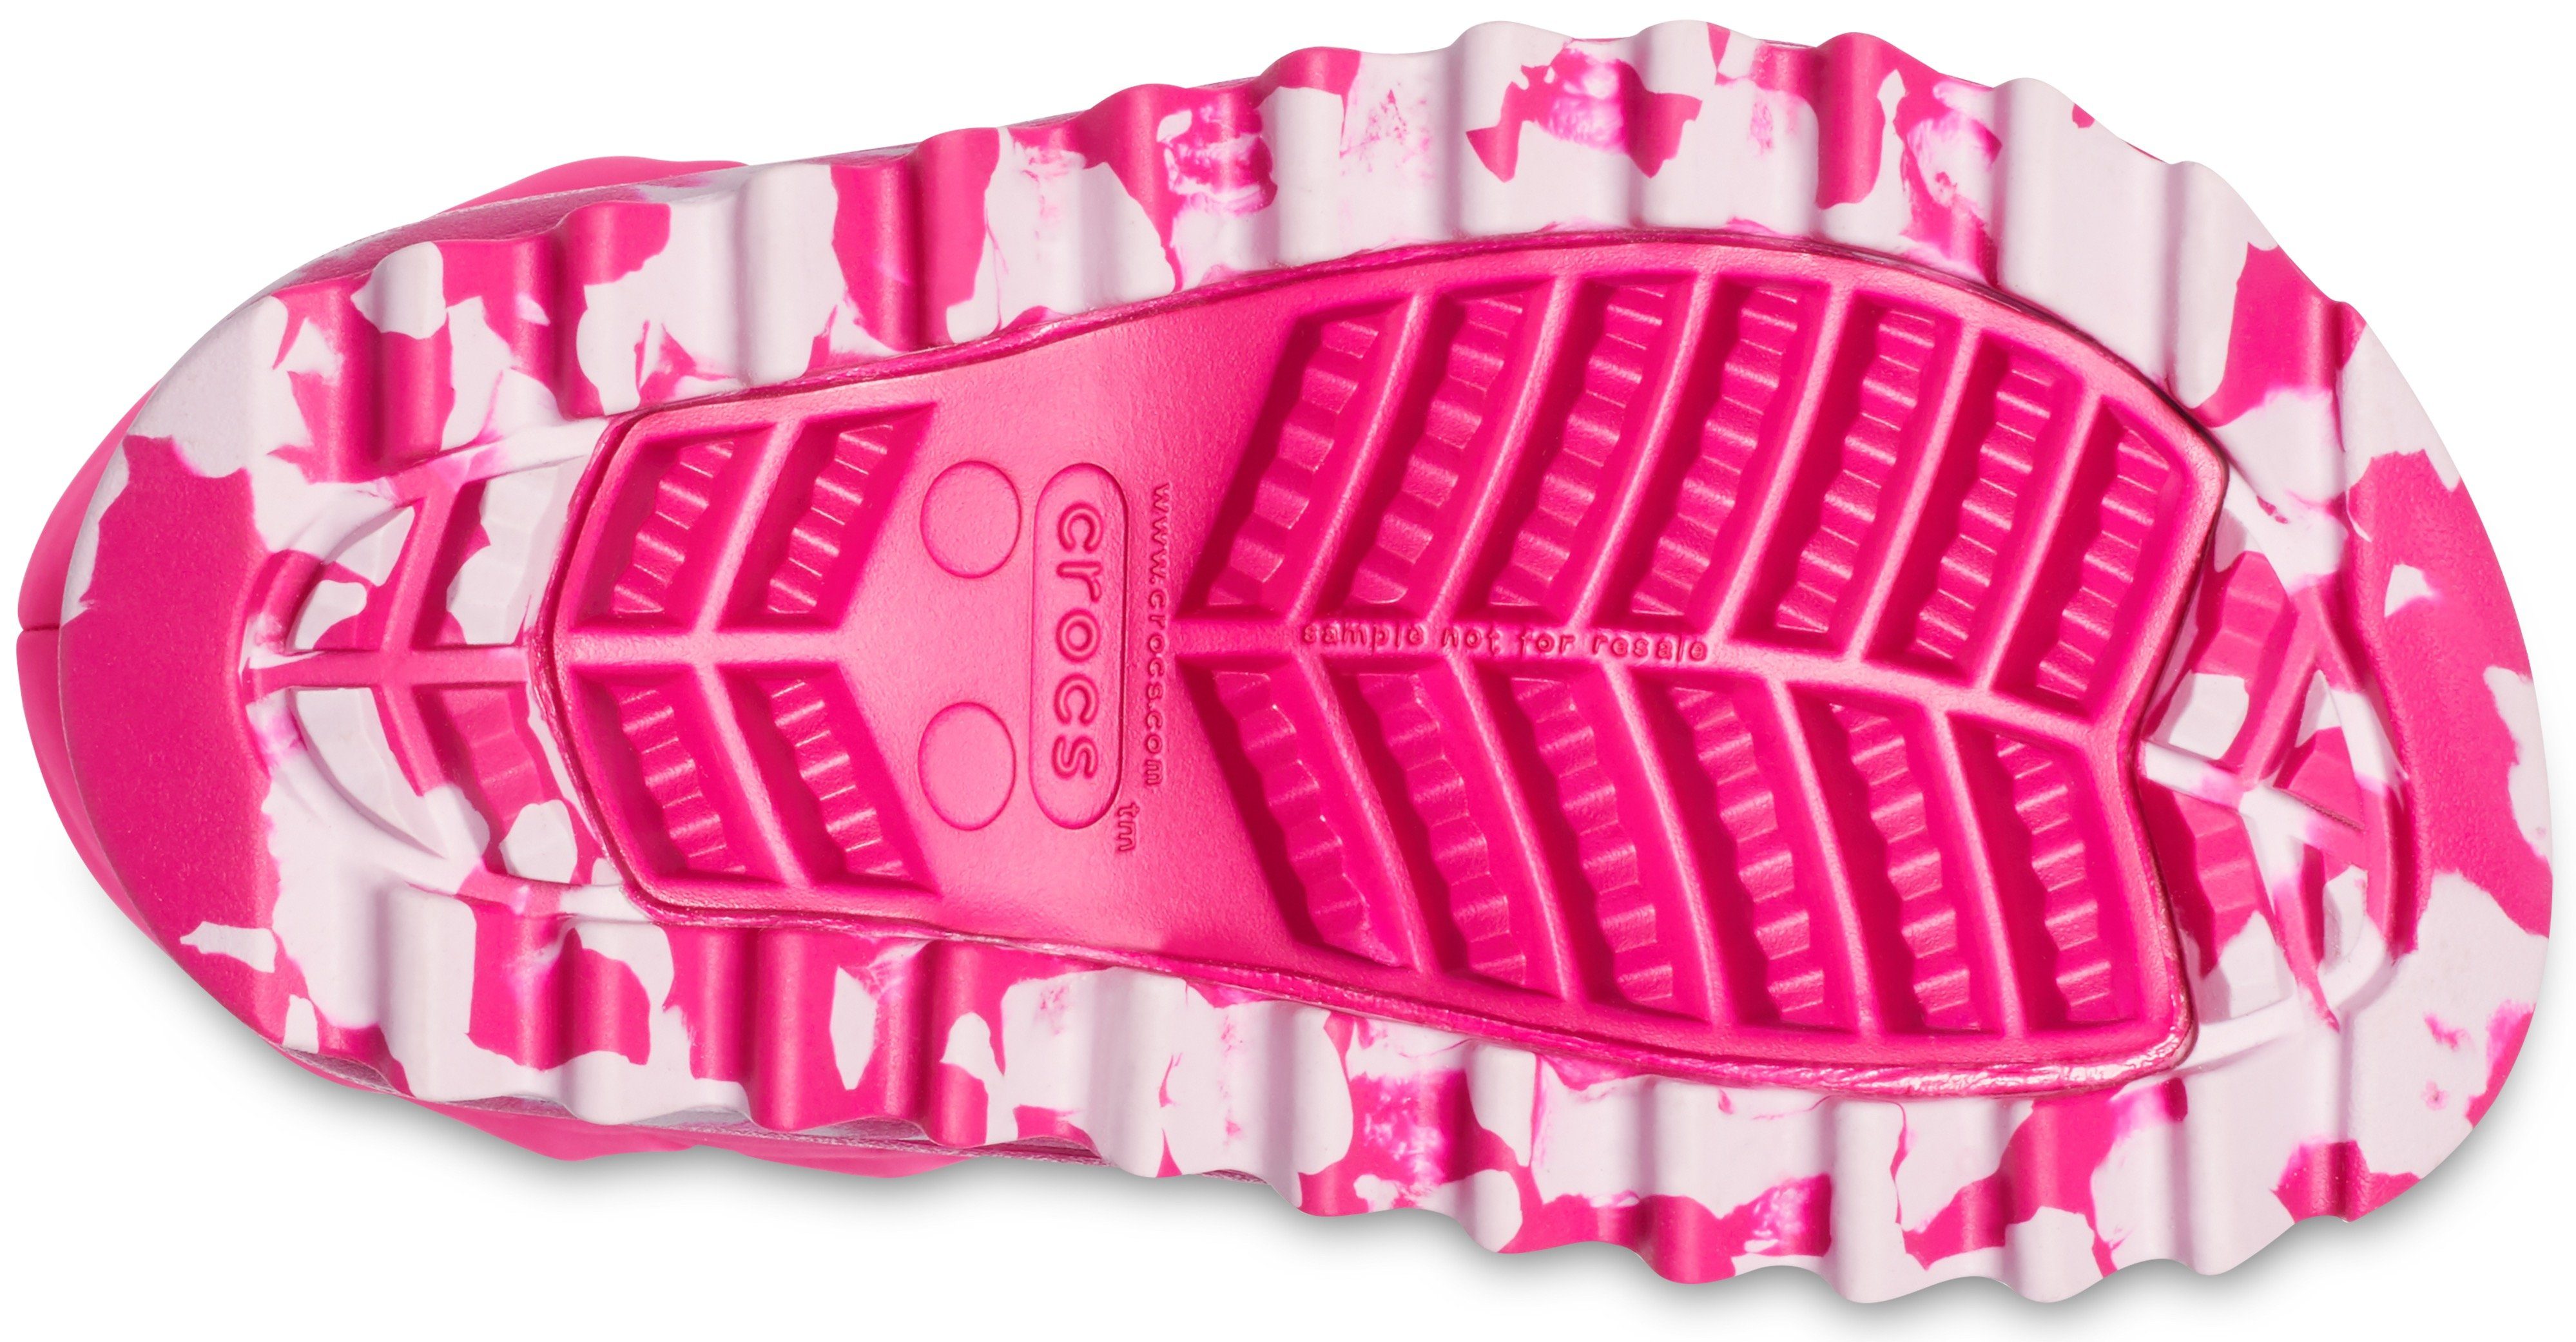 BOOT PUFF K pink-kombiniert zum CLASSIC NEO Schlupfen Winterboots Crocs